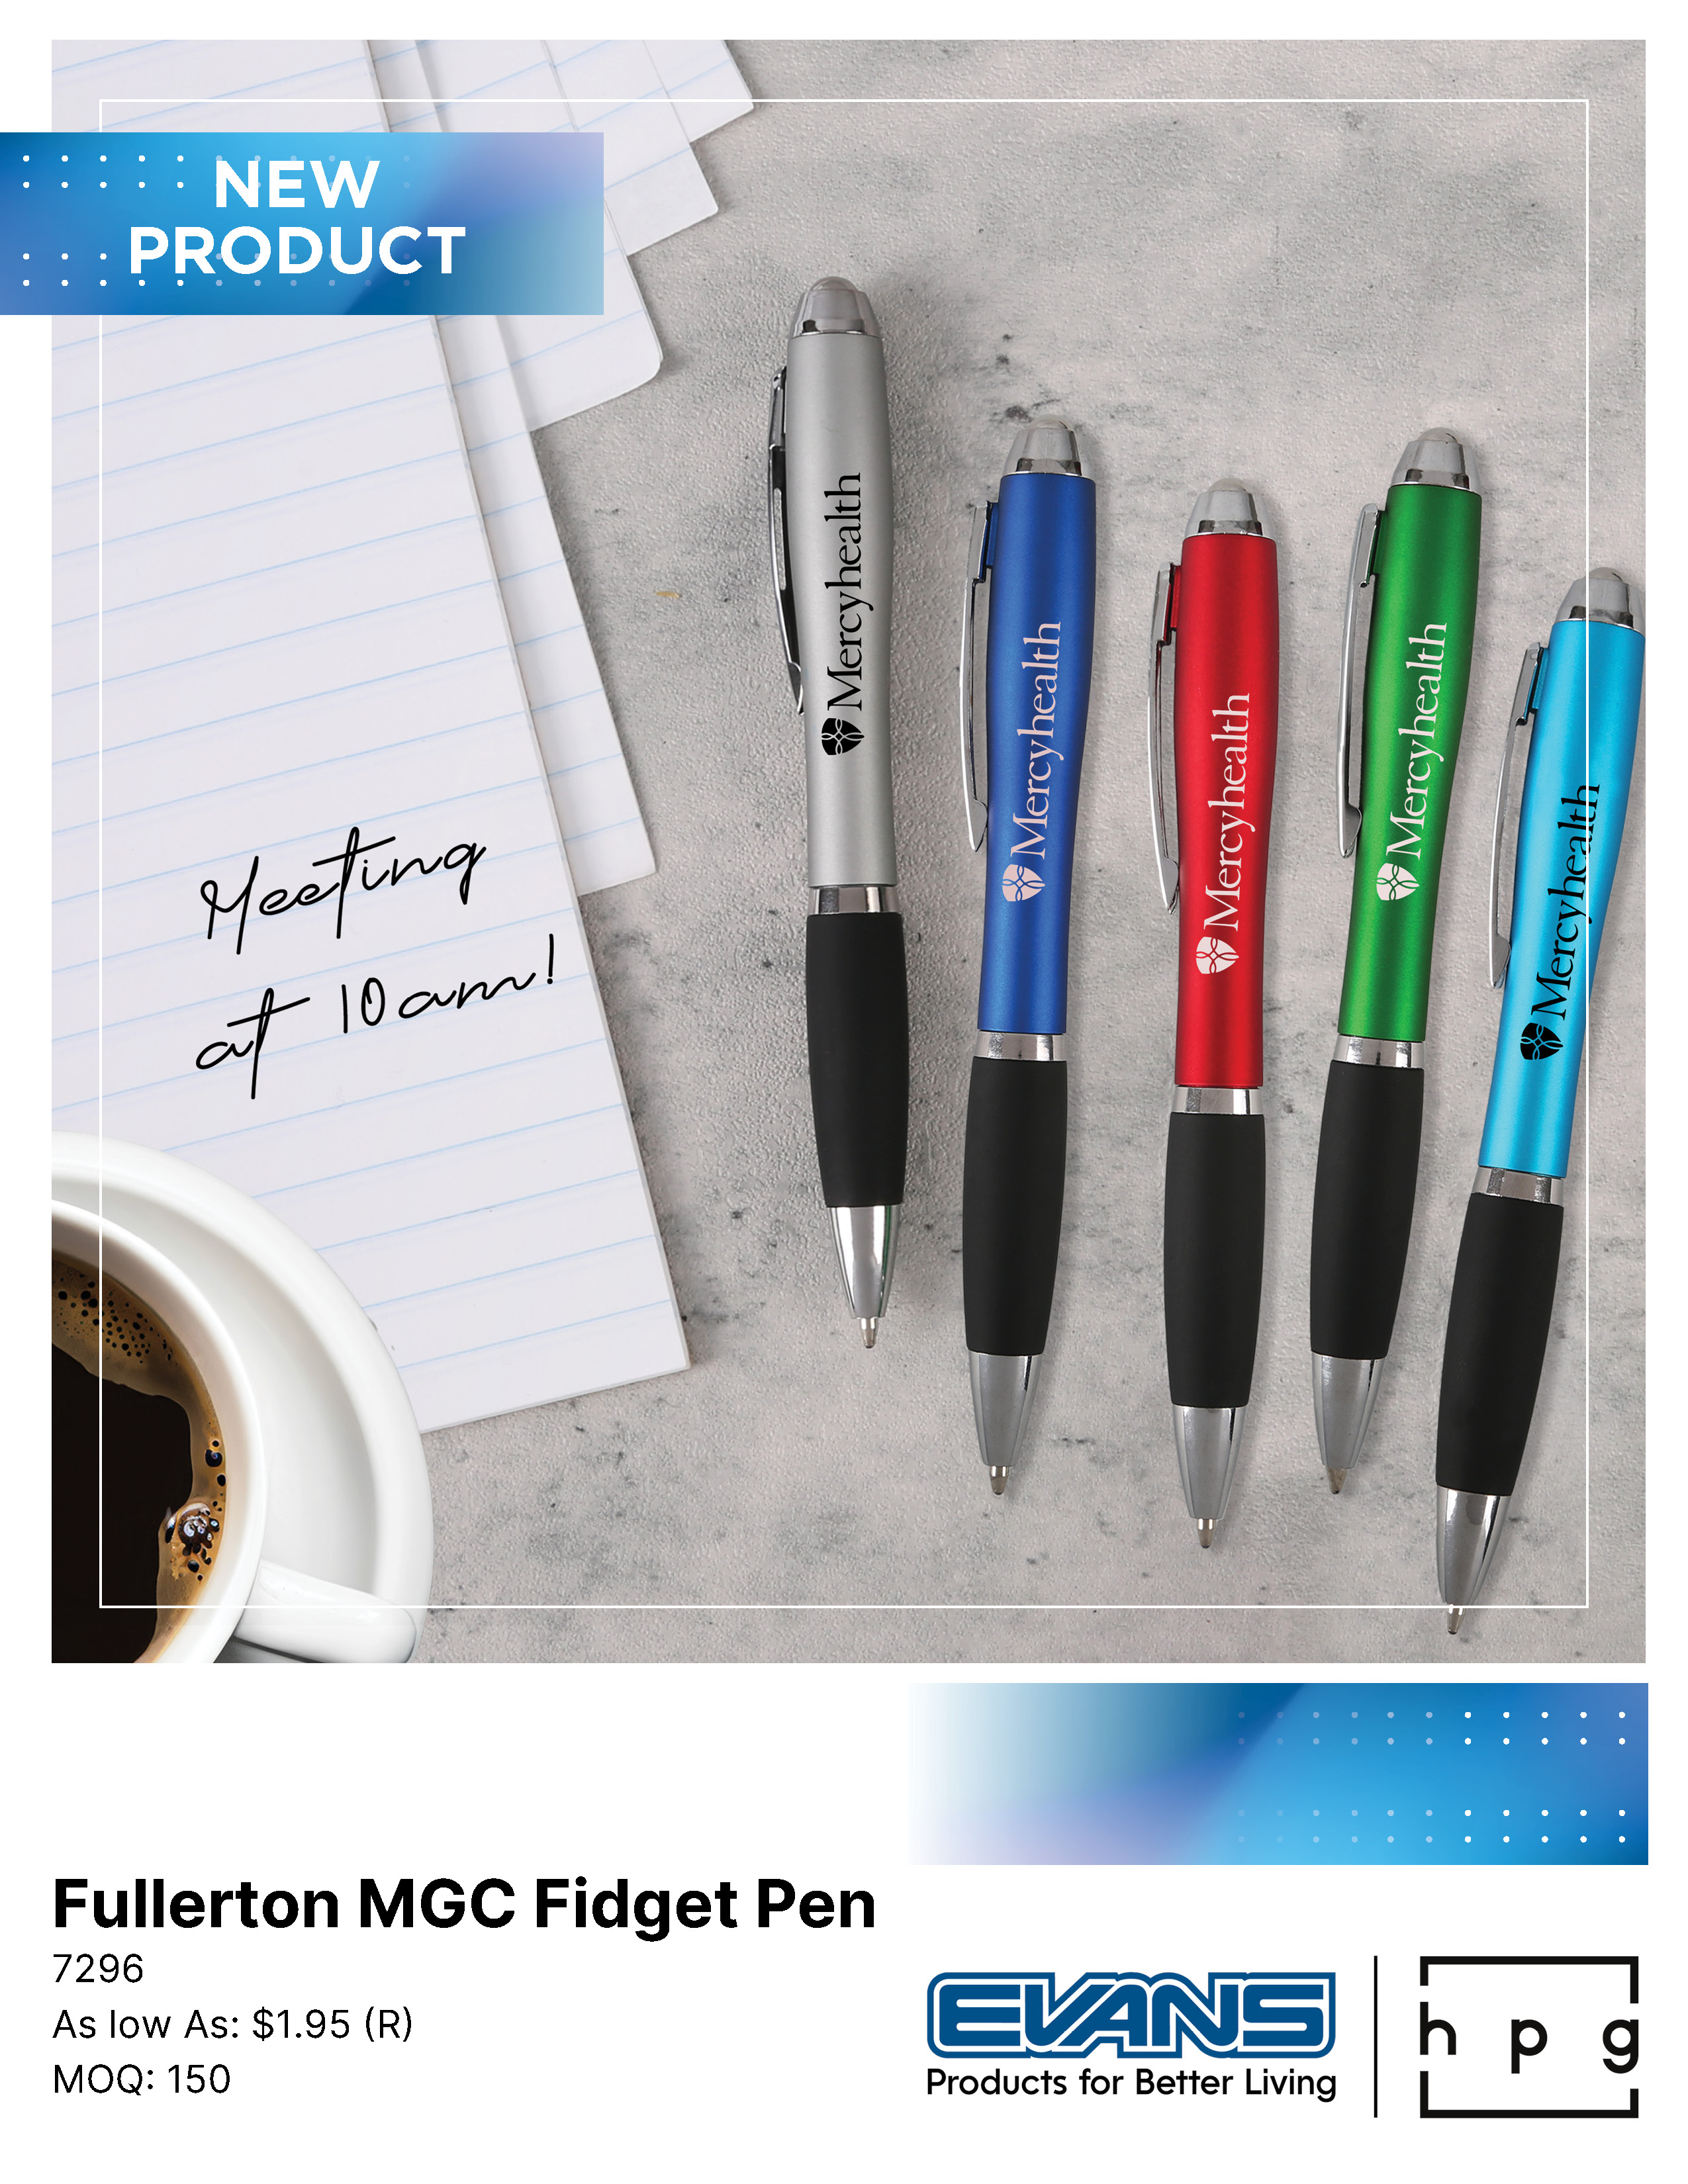 7296 Fullerton MGC Fidget Pen